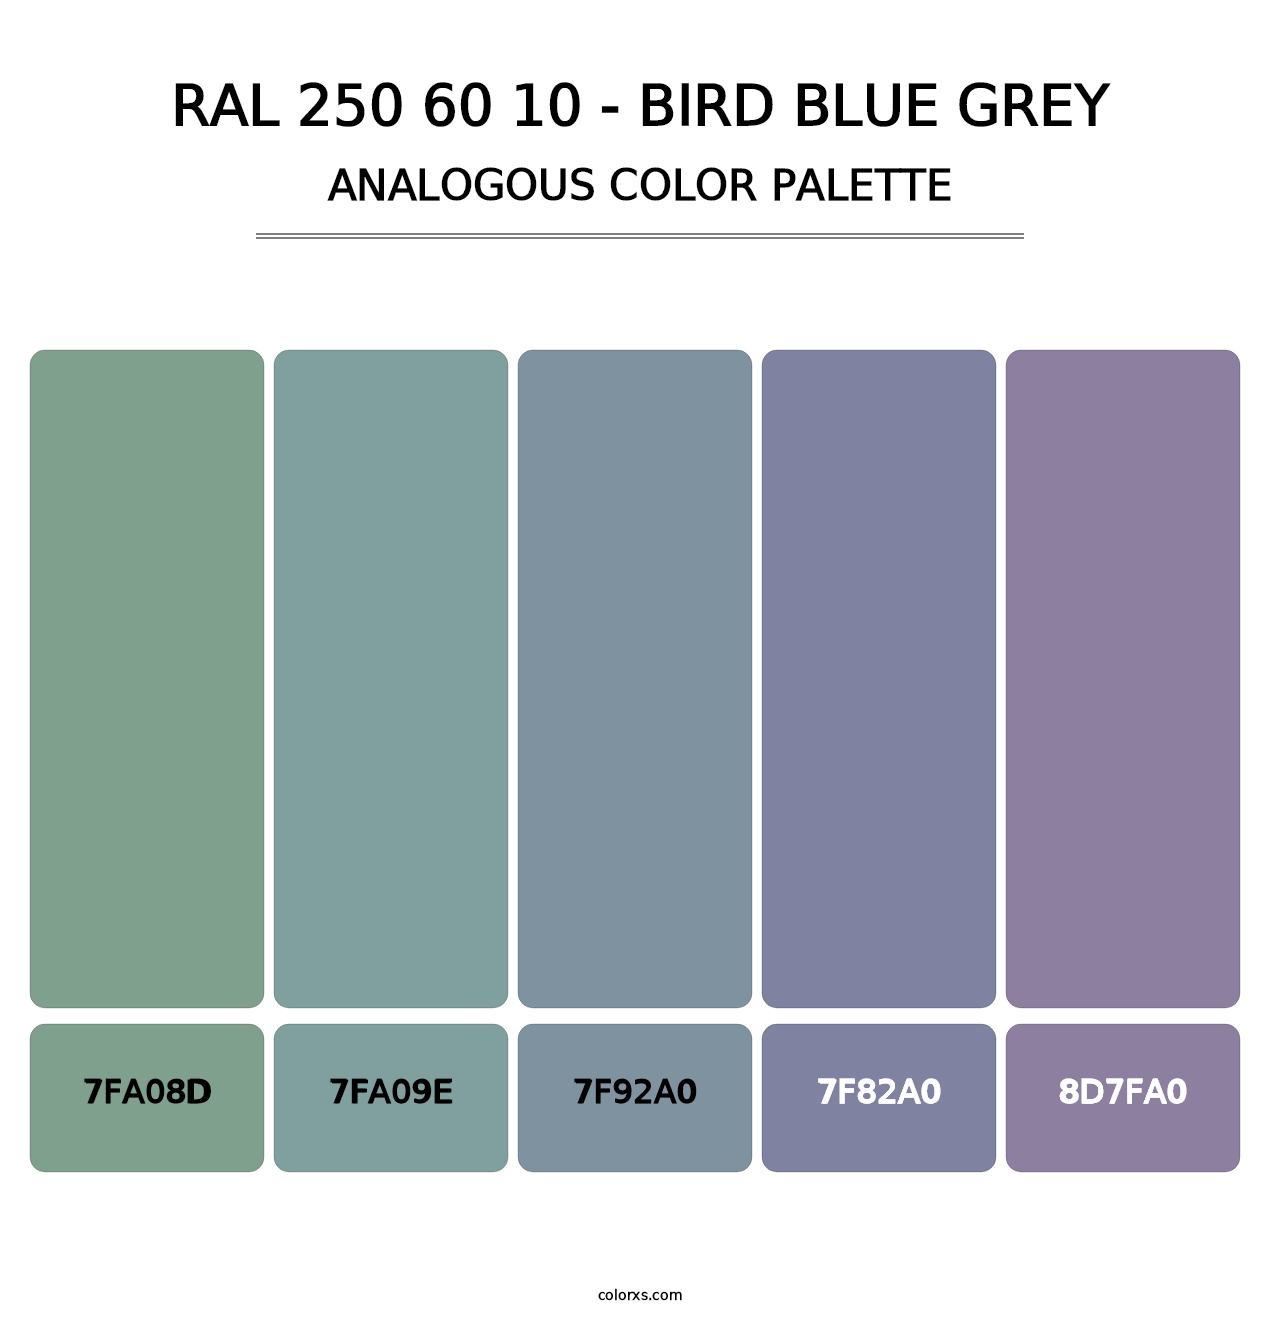 RAL 250 60 10 - Bird Blue Grey - Analogous Color Palette